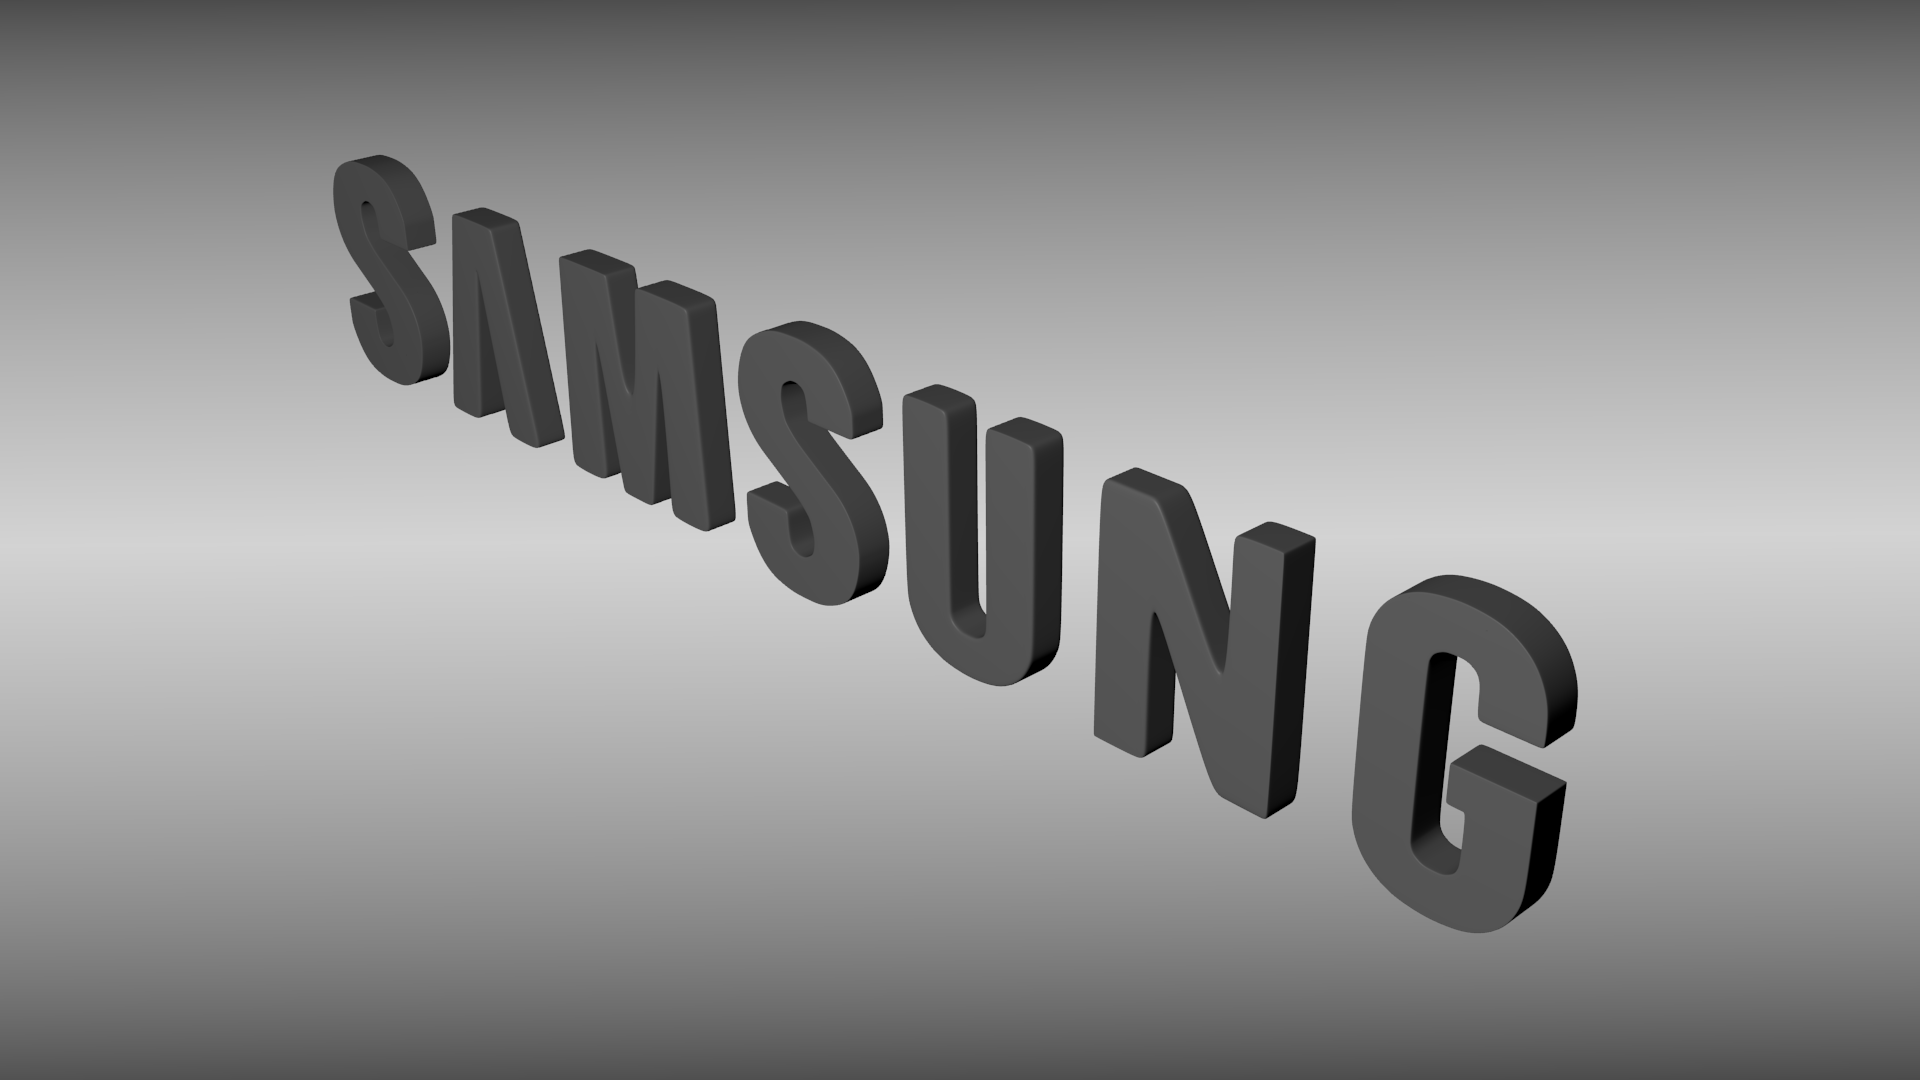 Samsung Electronics To Showcase Expanded Professional Gaming Monitors Lineup at Gamescom 2016